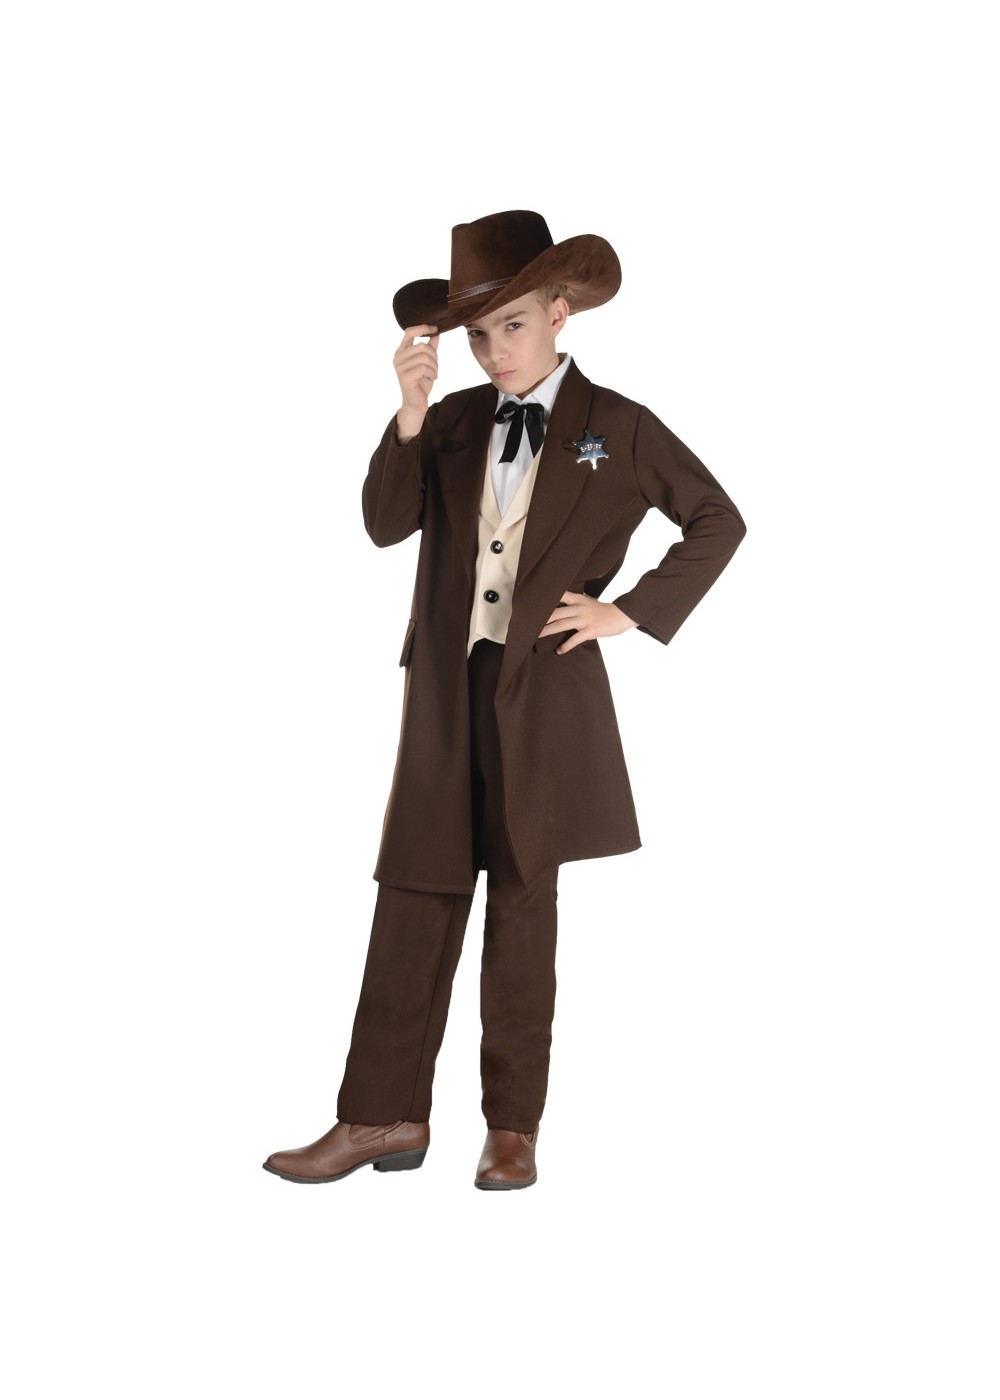 Western Sheriff Costume